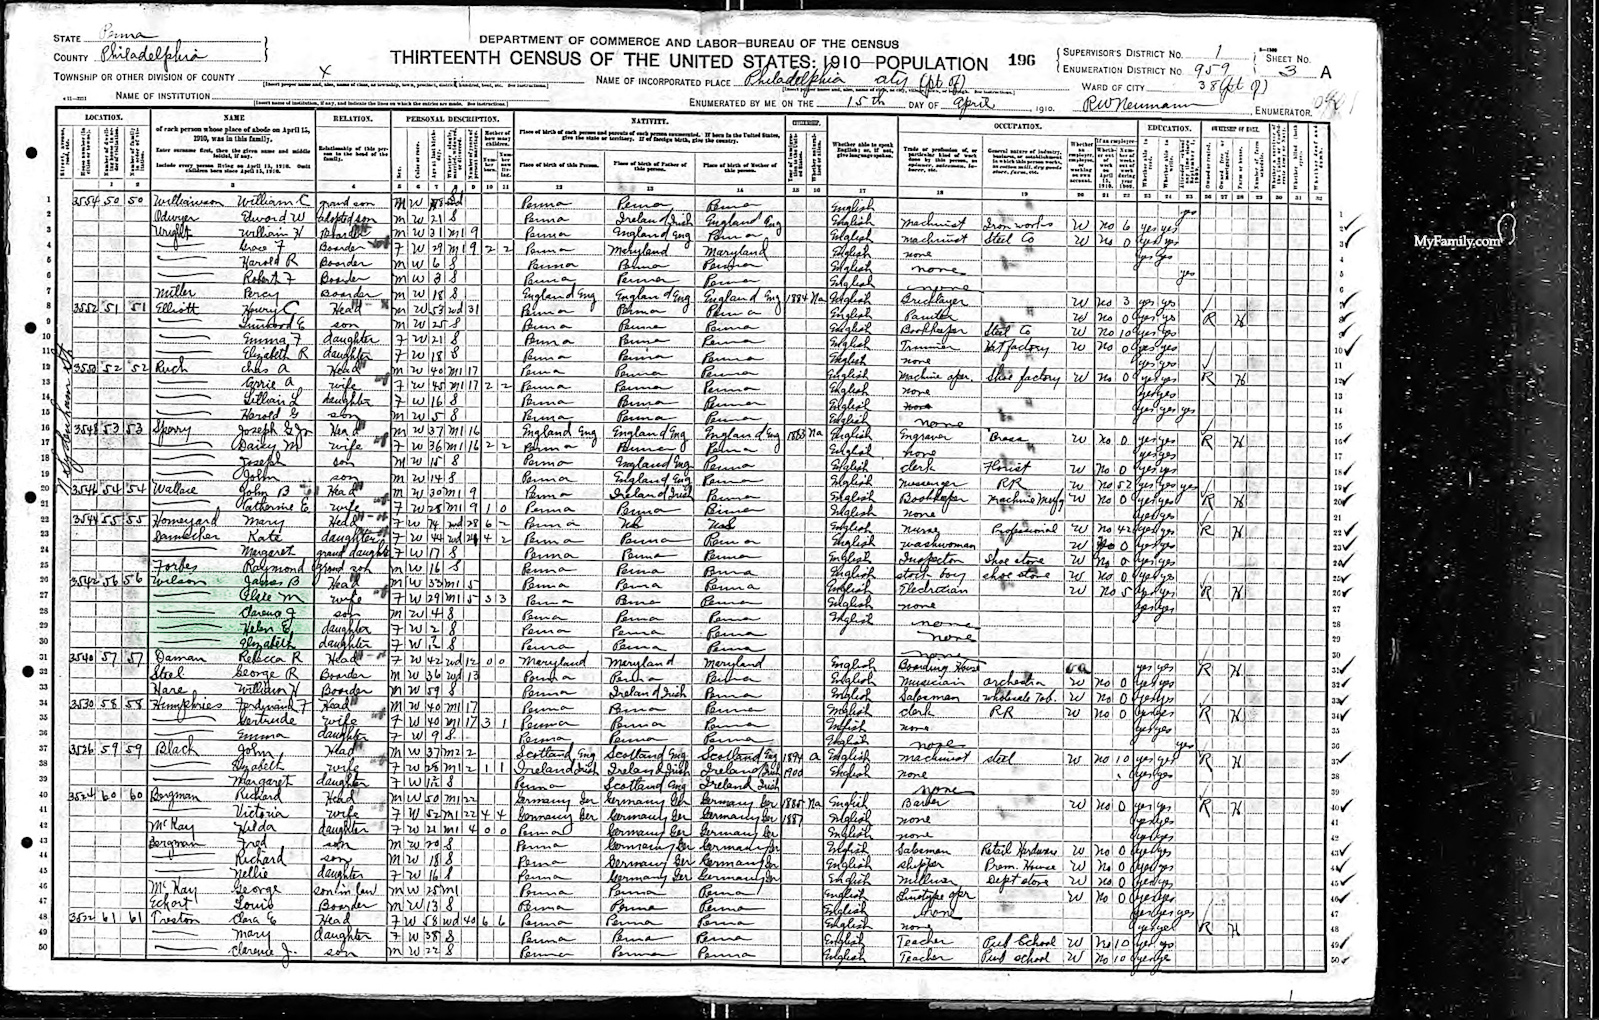 Census Wilson - 1910 United States Federal Census